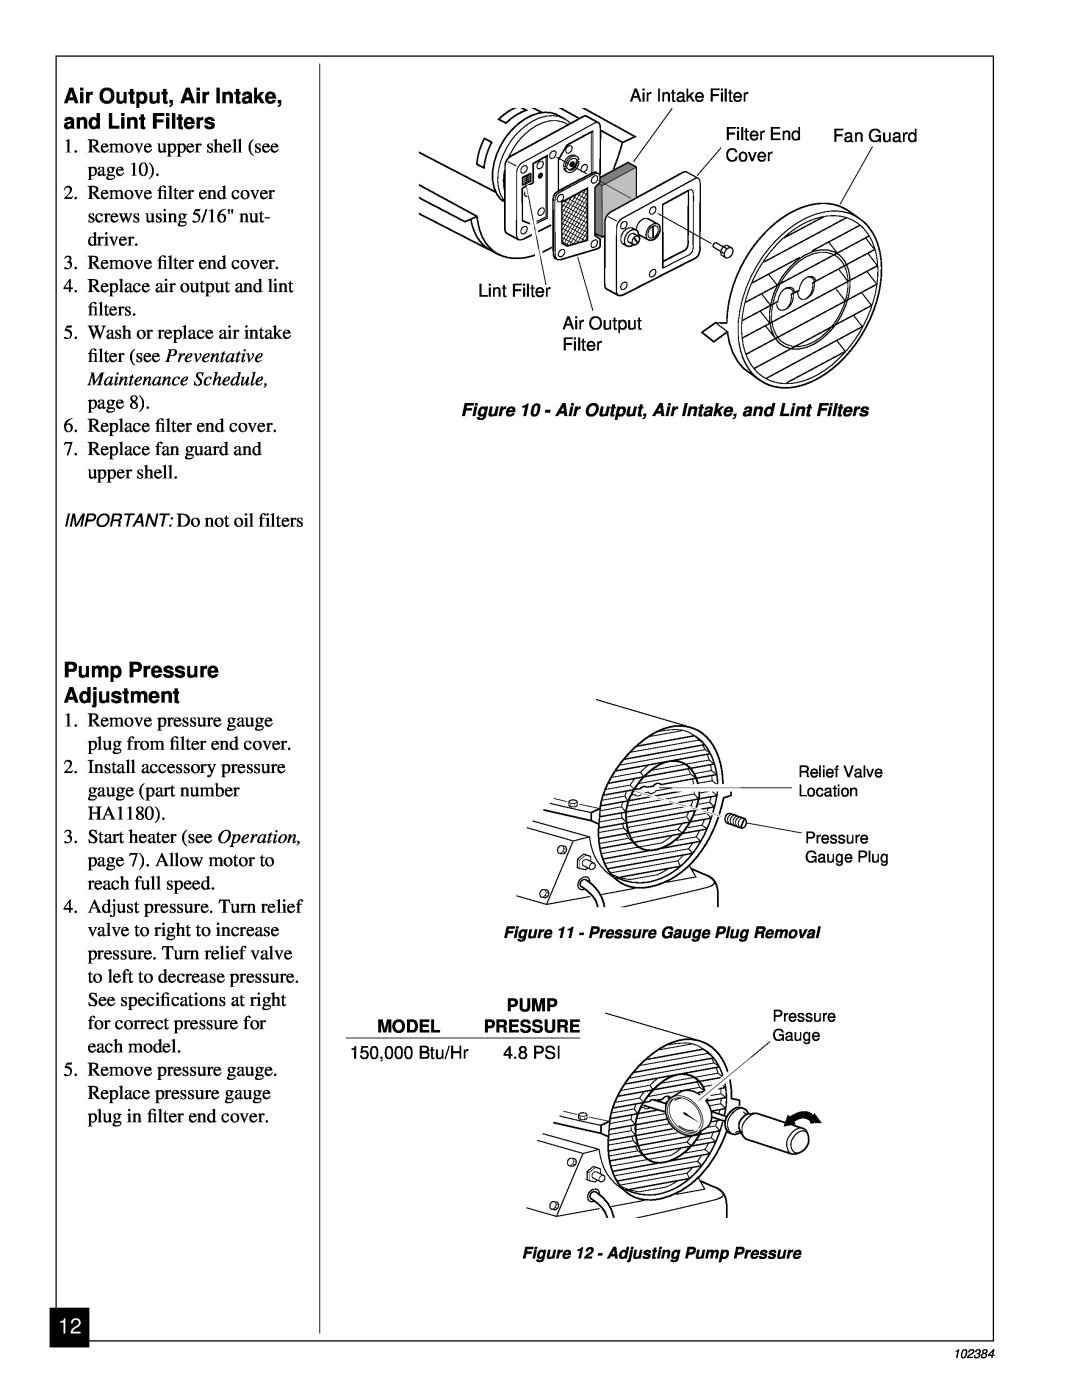 Master Lock BR150CE owner manual Air Output, Air Intake, and Lint Filters, Pump Pressure Adjustment 